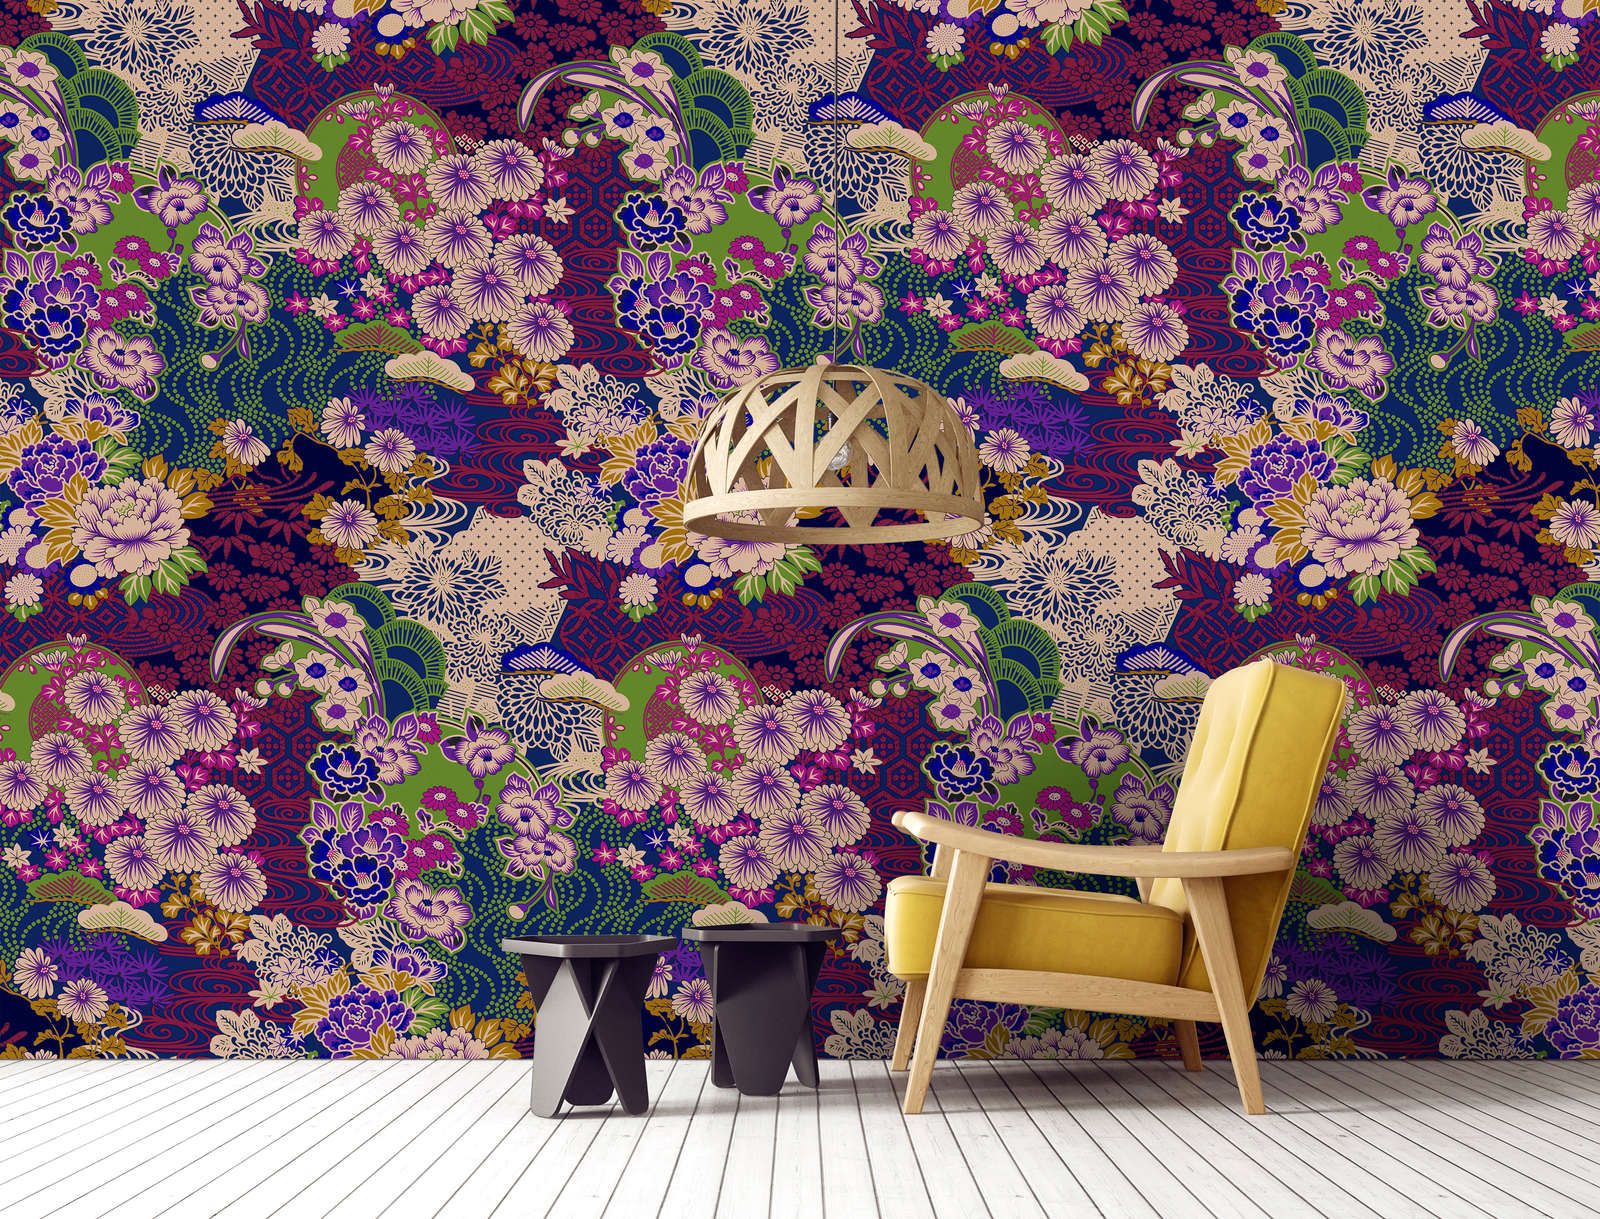             Photo wallpaper »kimo 2« - Abstract flower artwork - Purple, Green | Smooth, slightly shiny premium non-woven fabric
        